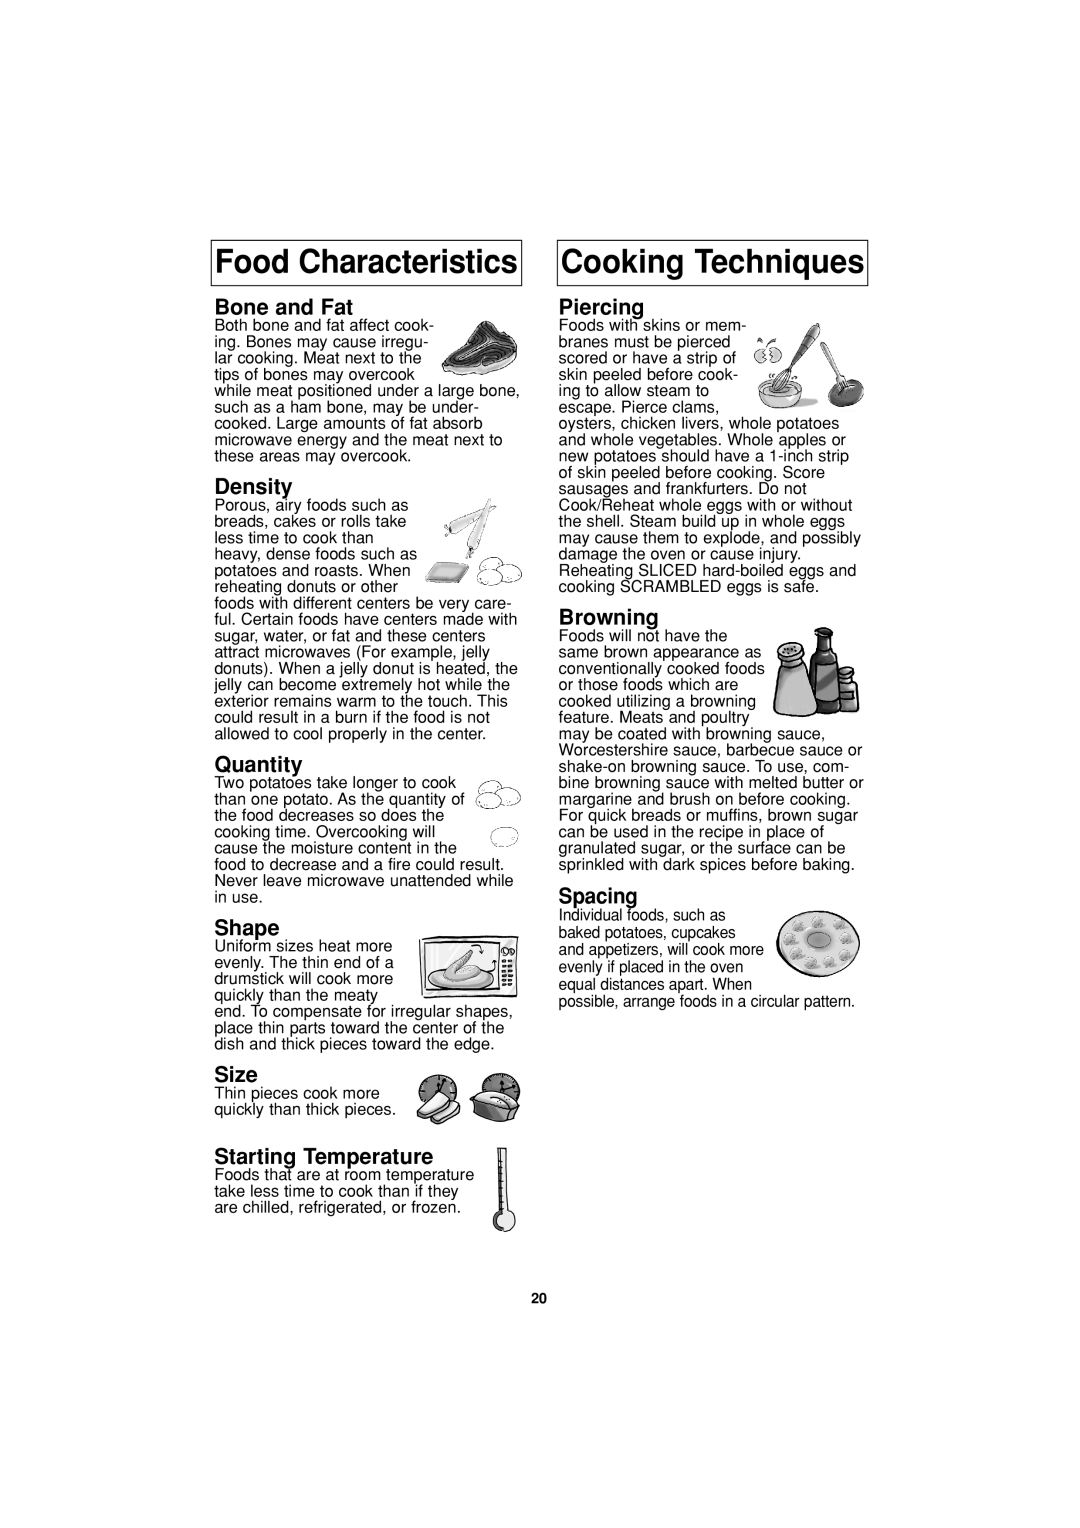 Panasonic NN-S334 Food Characteristics, Cooking Techniques, Bone and Fat, Density, Quantity, Shape, Size, Piercing 